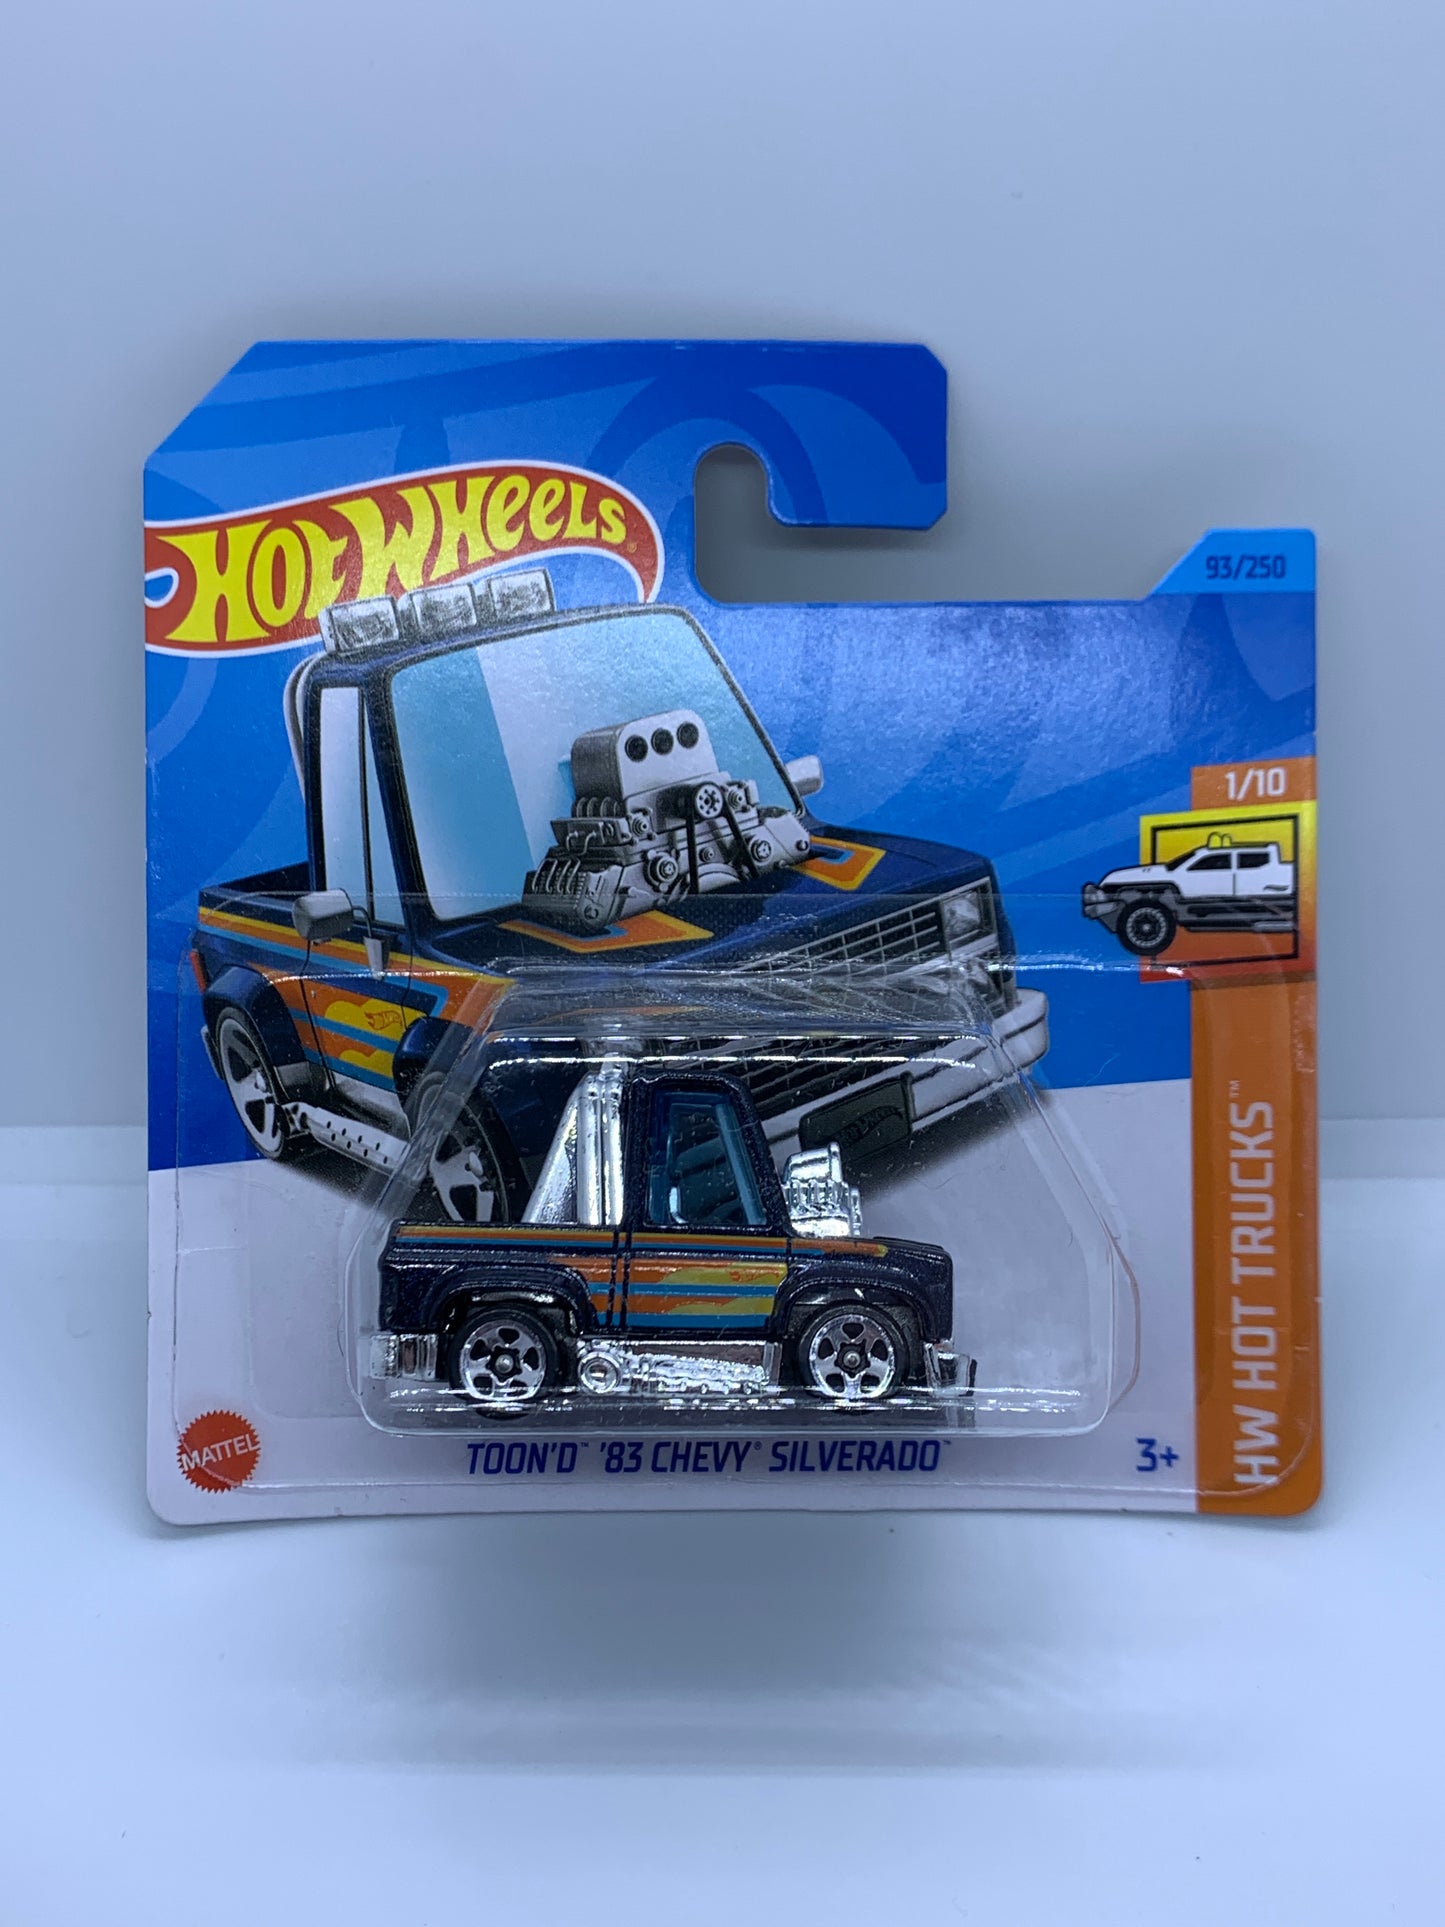 Hot Wheels Mainline - Toon’d ‘83 Chevy Silverado